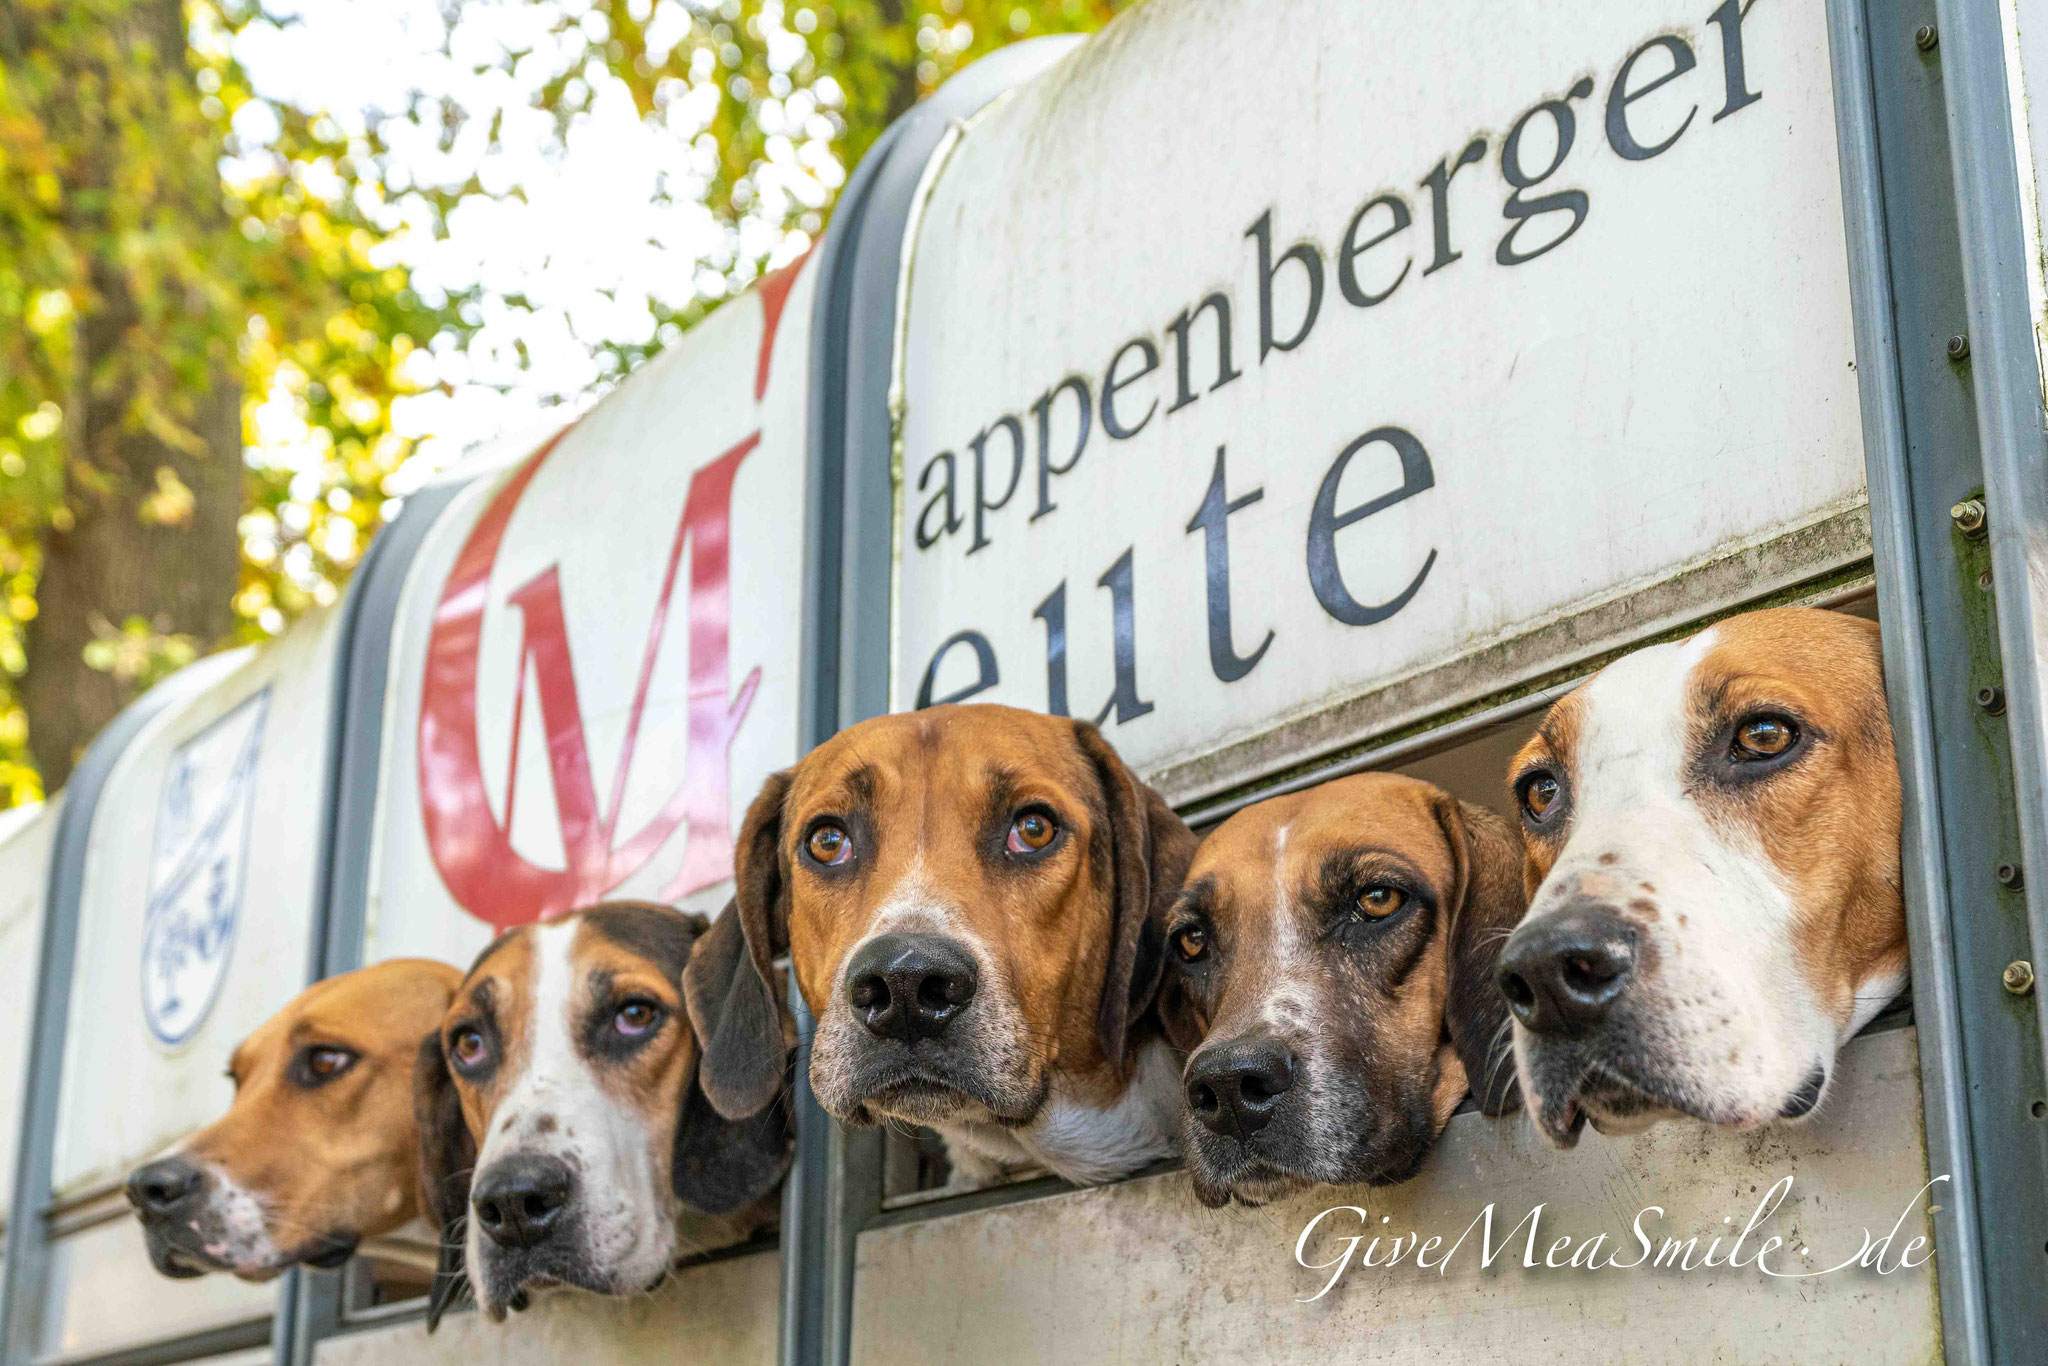 Jagdfotos vom Team @Givemeasmile.de auf der Fotojagd, Peter Jäger  #givemeasmilede #taunusmeute #cappenbergermeute #hermannsburg #misselhornerhof #misselhornerheide #foxhounds #beagles #jagdreiten #schleppjagd